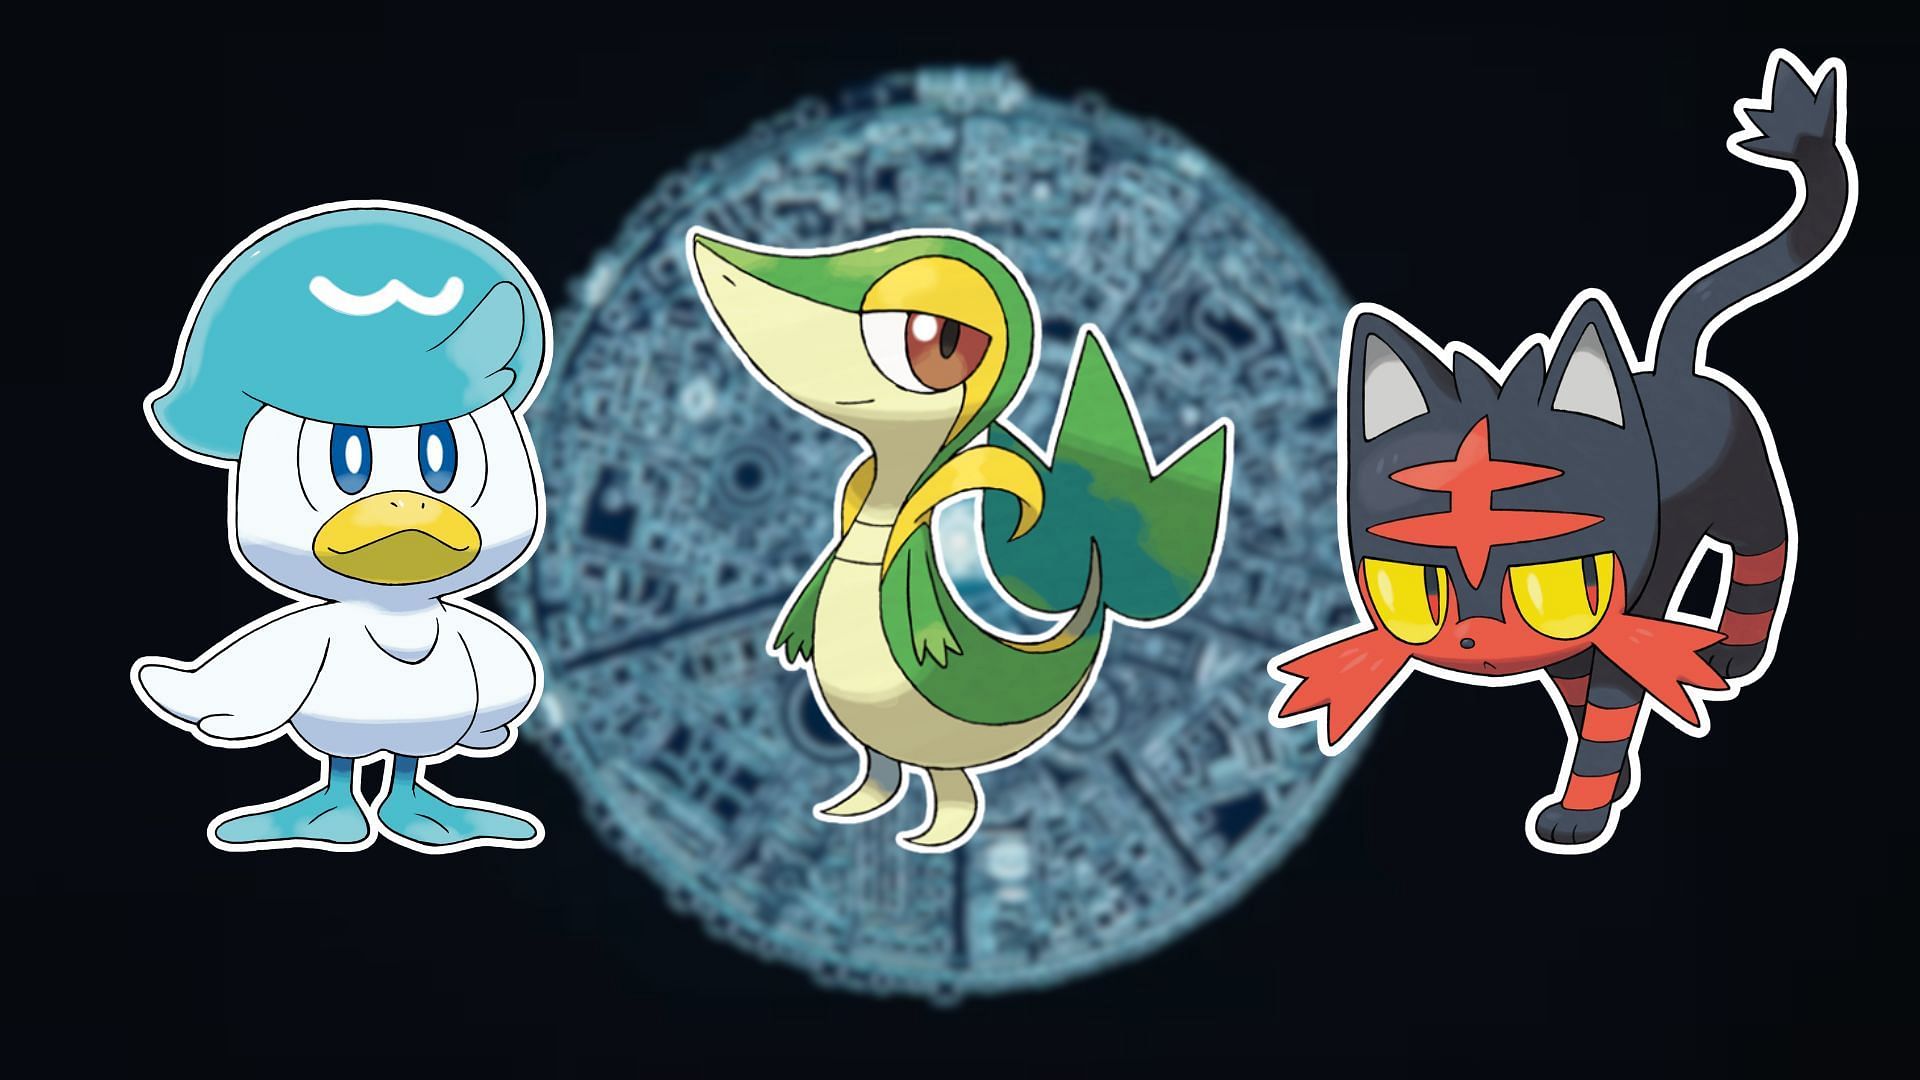 Quaxly, Snivy and Litten (Image via The Pokemon Company)